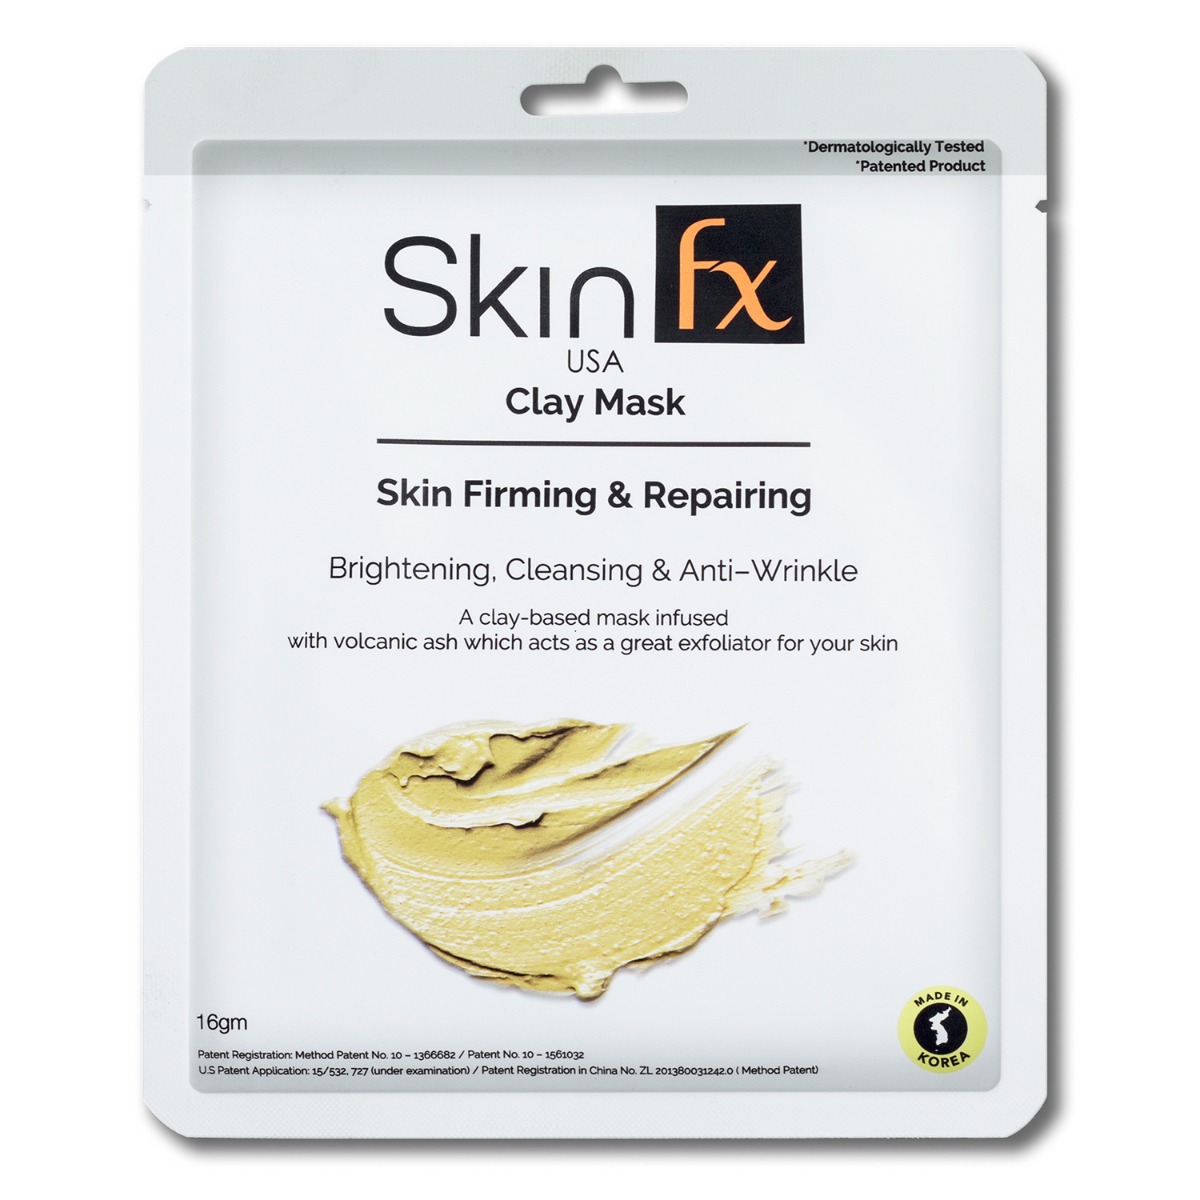 Skin Fx Clay Mask For Skin Firming & Repairing, 16gm